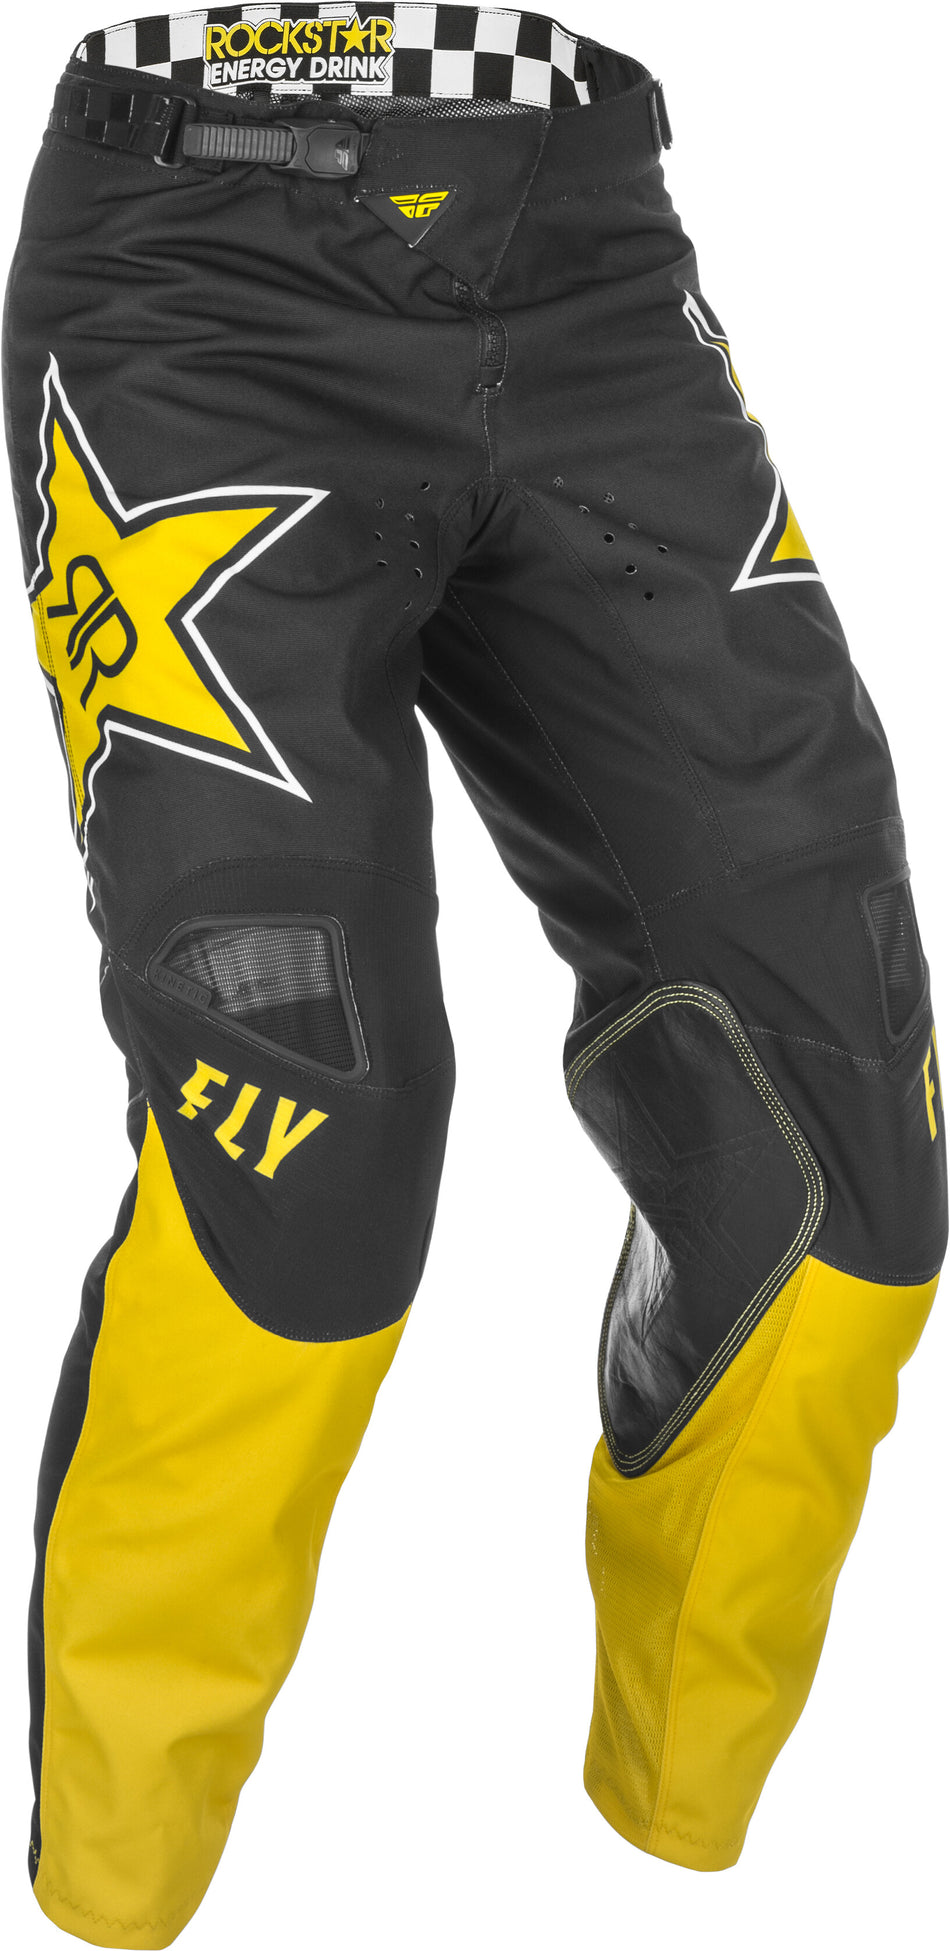 FLY RACING Kinetic Rockstar Pants Yellow/Black Sz 32 374-02332